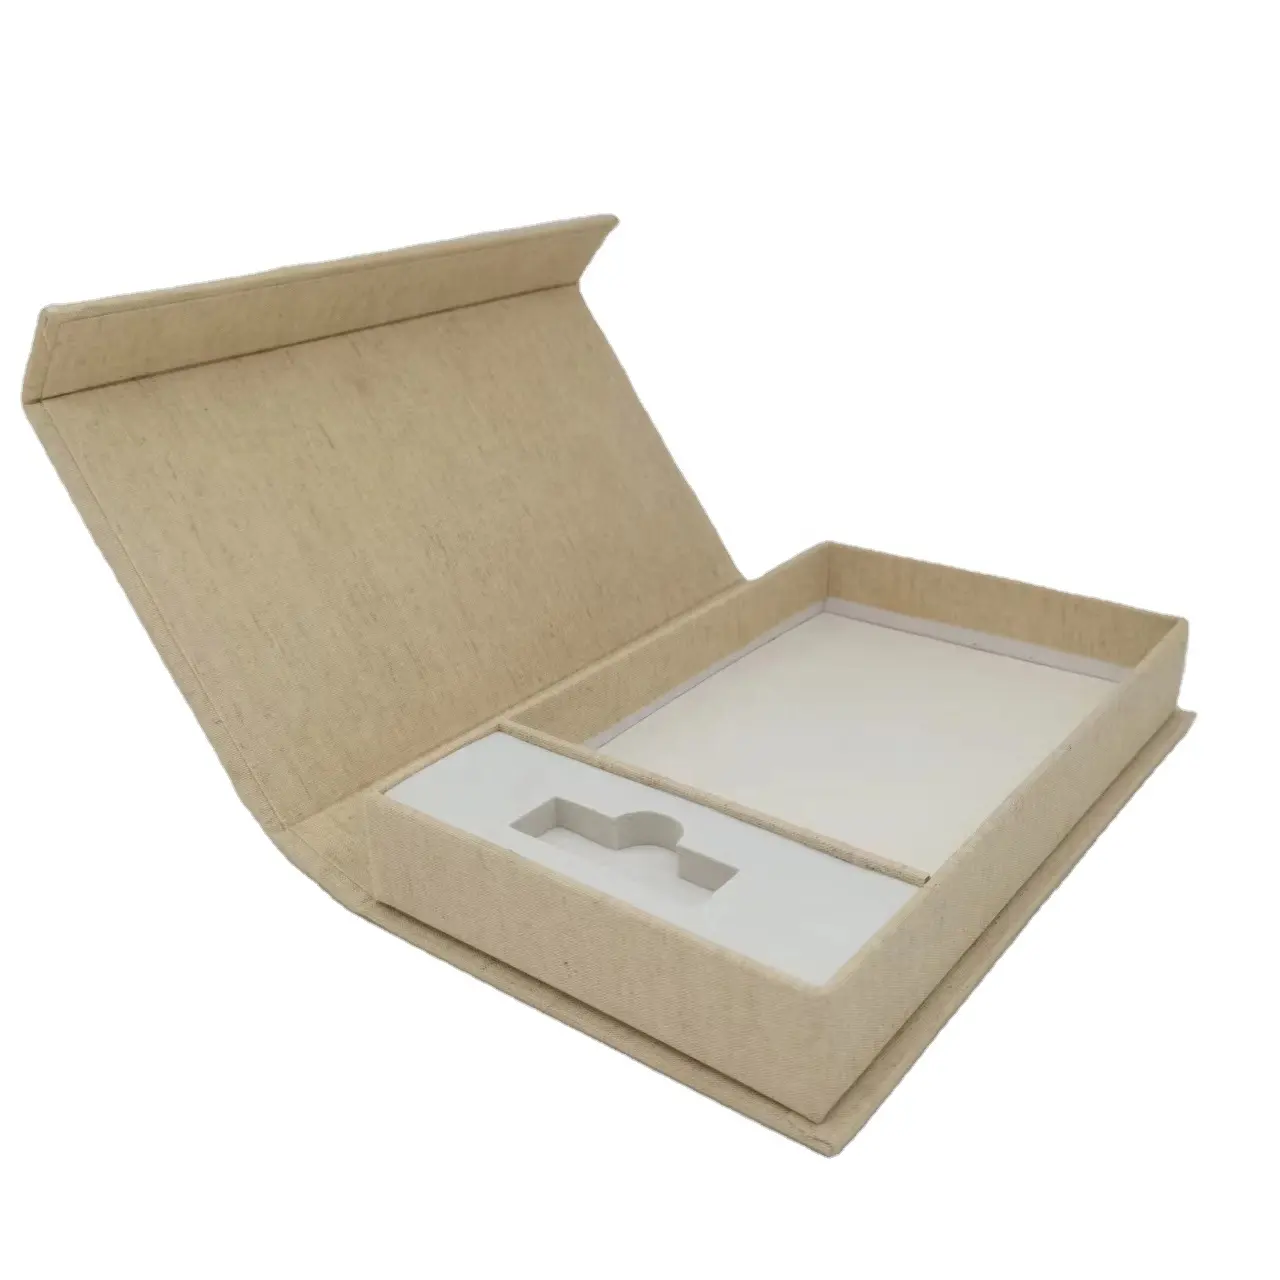 Custom High Quality Memory Box with USB Storage Set 5 x7 Photo Album Picture Frame Keepsake Memory Fabric Paper Box Packaging